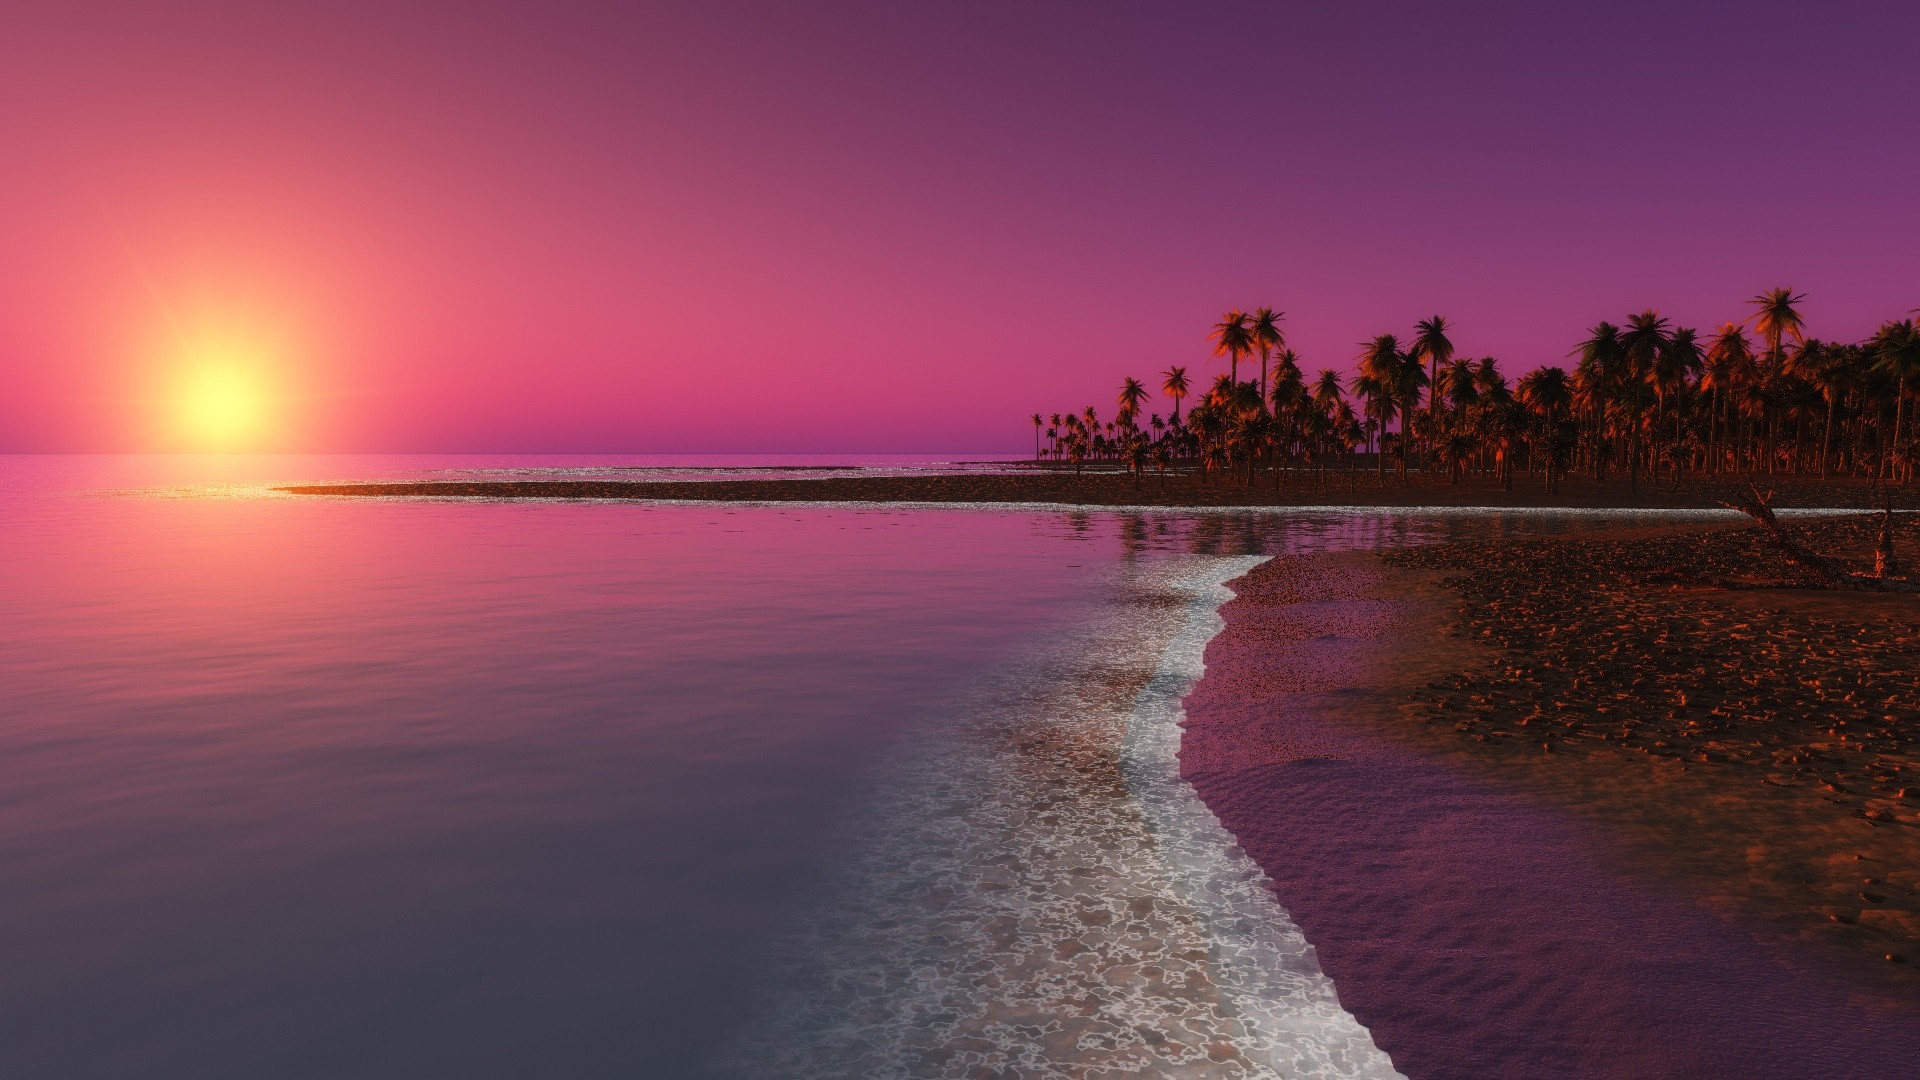 General 1920x1080 water beach palm trees sunlight evening sky